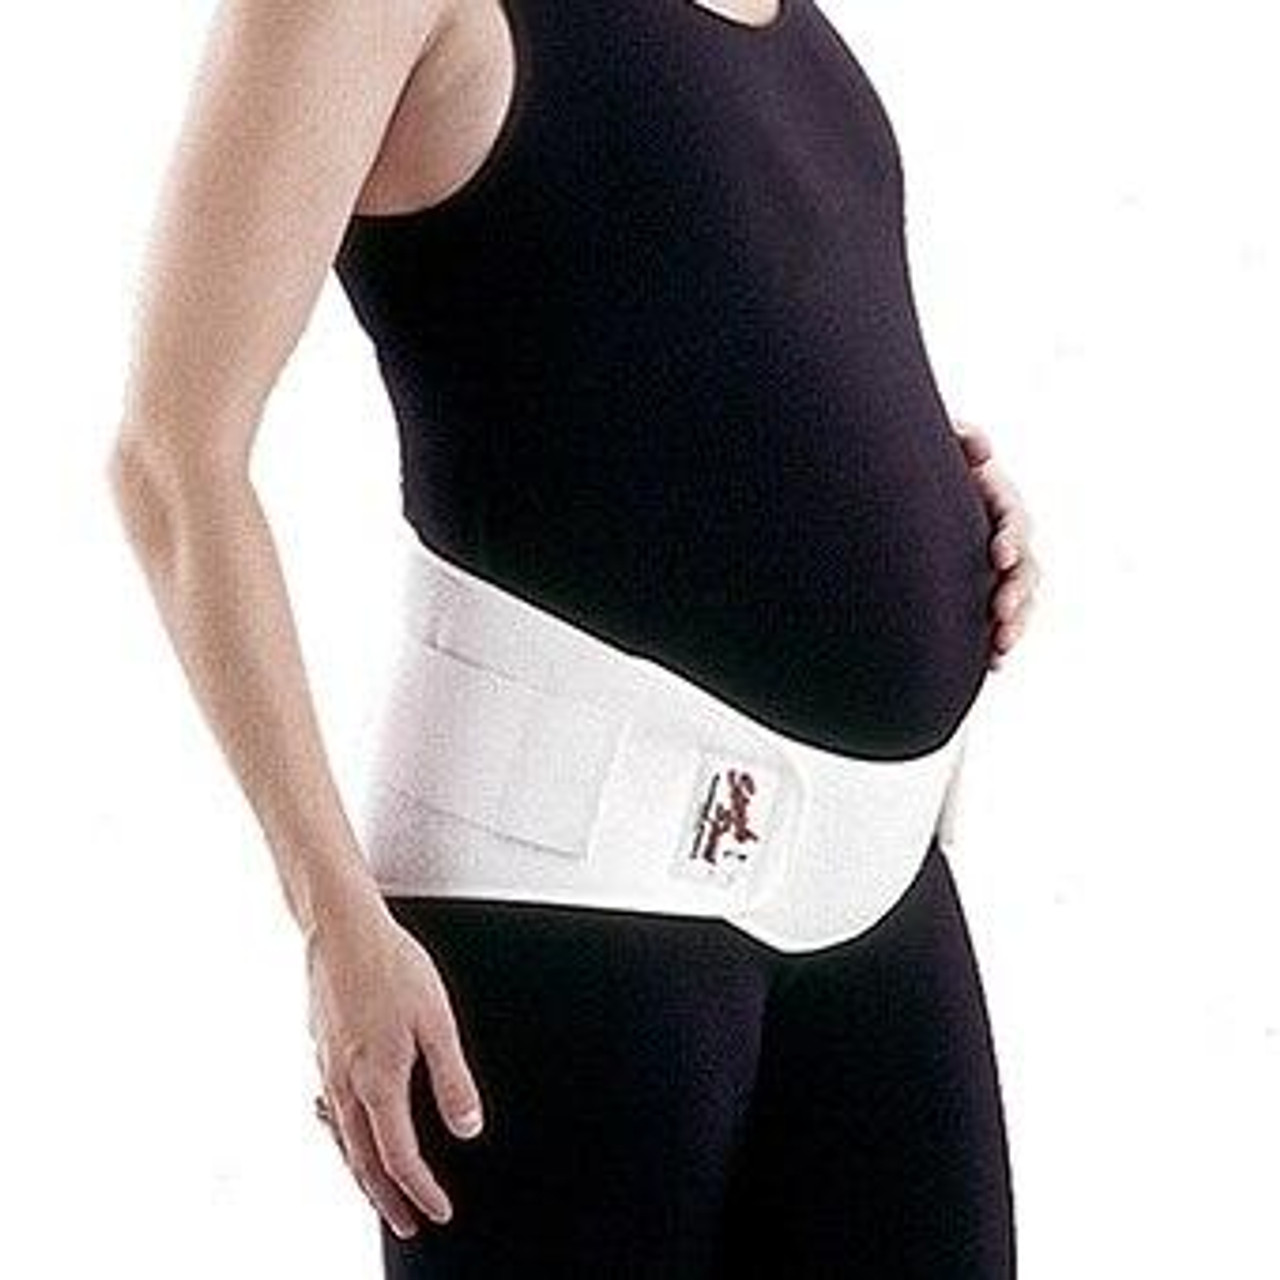 Harness Gravidarum – Maternity support Belt from HGR